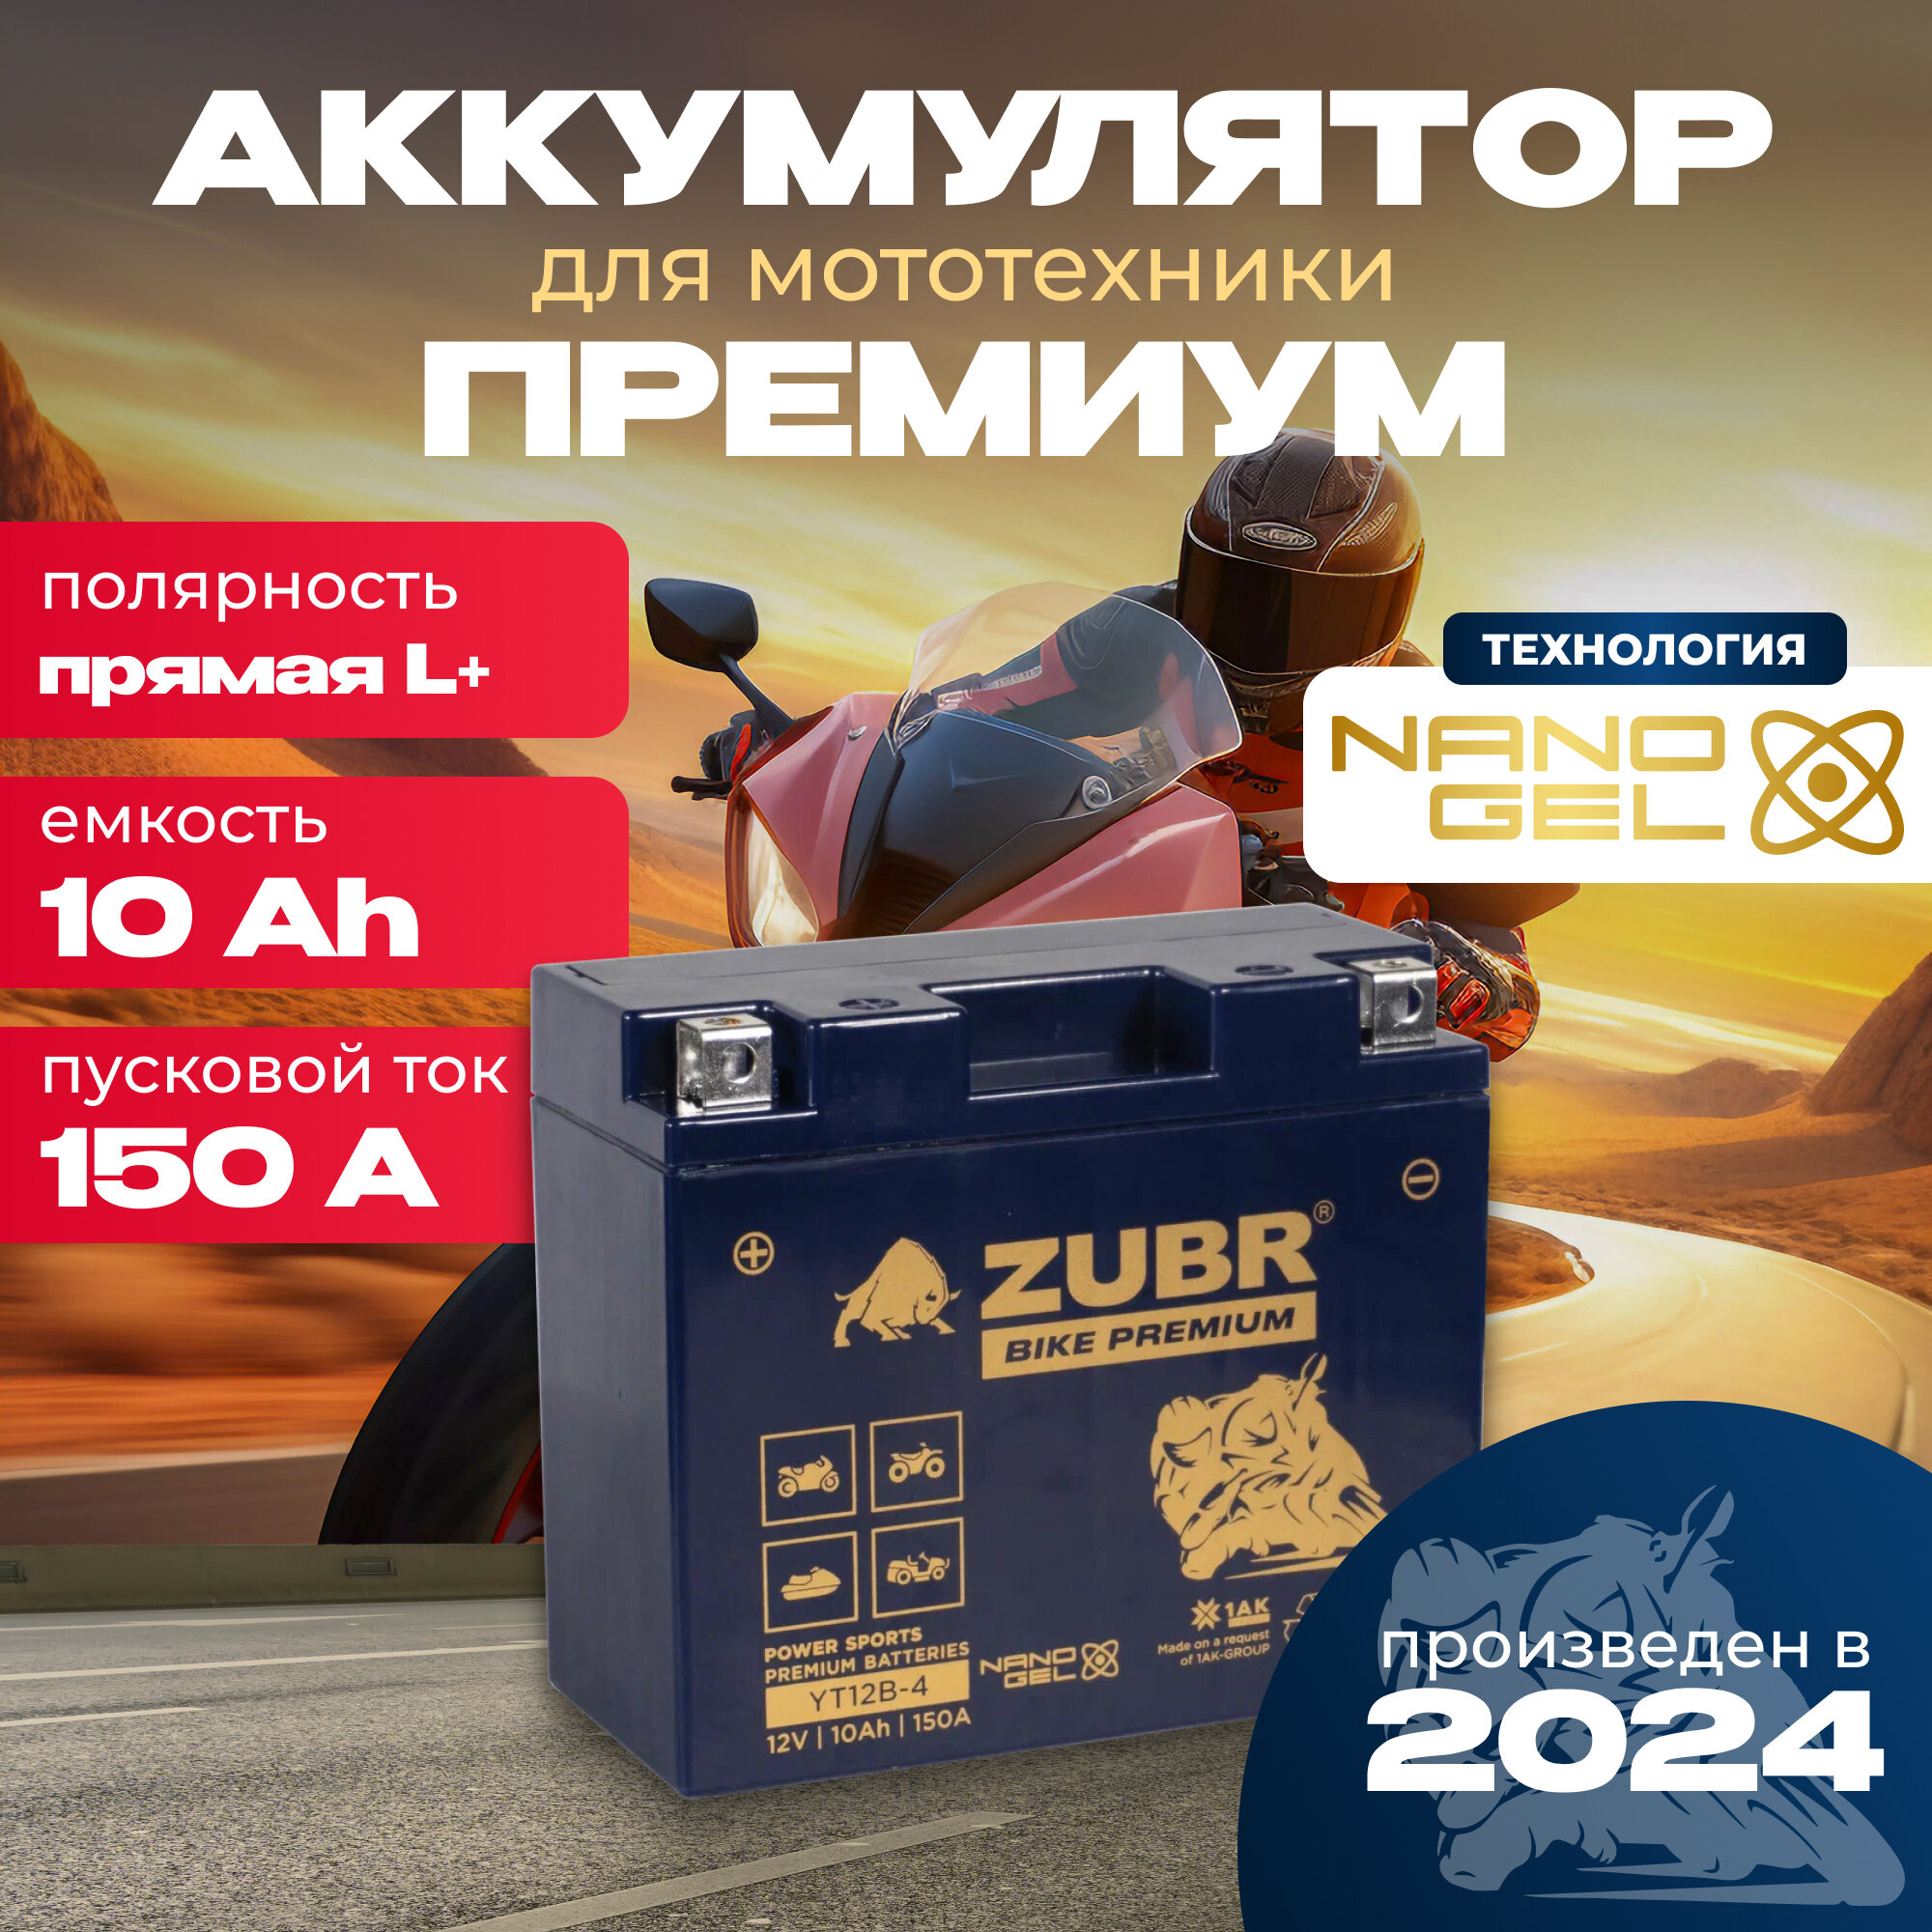 Аккумулятор для мотоцикла 12v ZUBR BIKE PREMIUM YT12B-4 (NANO-GEL) прямая полярность 10 Ah 150 A гелевый, акб на скутер, мопед, квадроцикл 150x69x130 мм